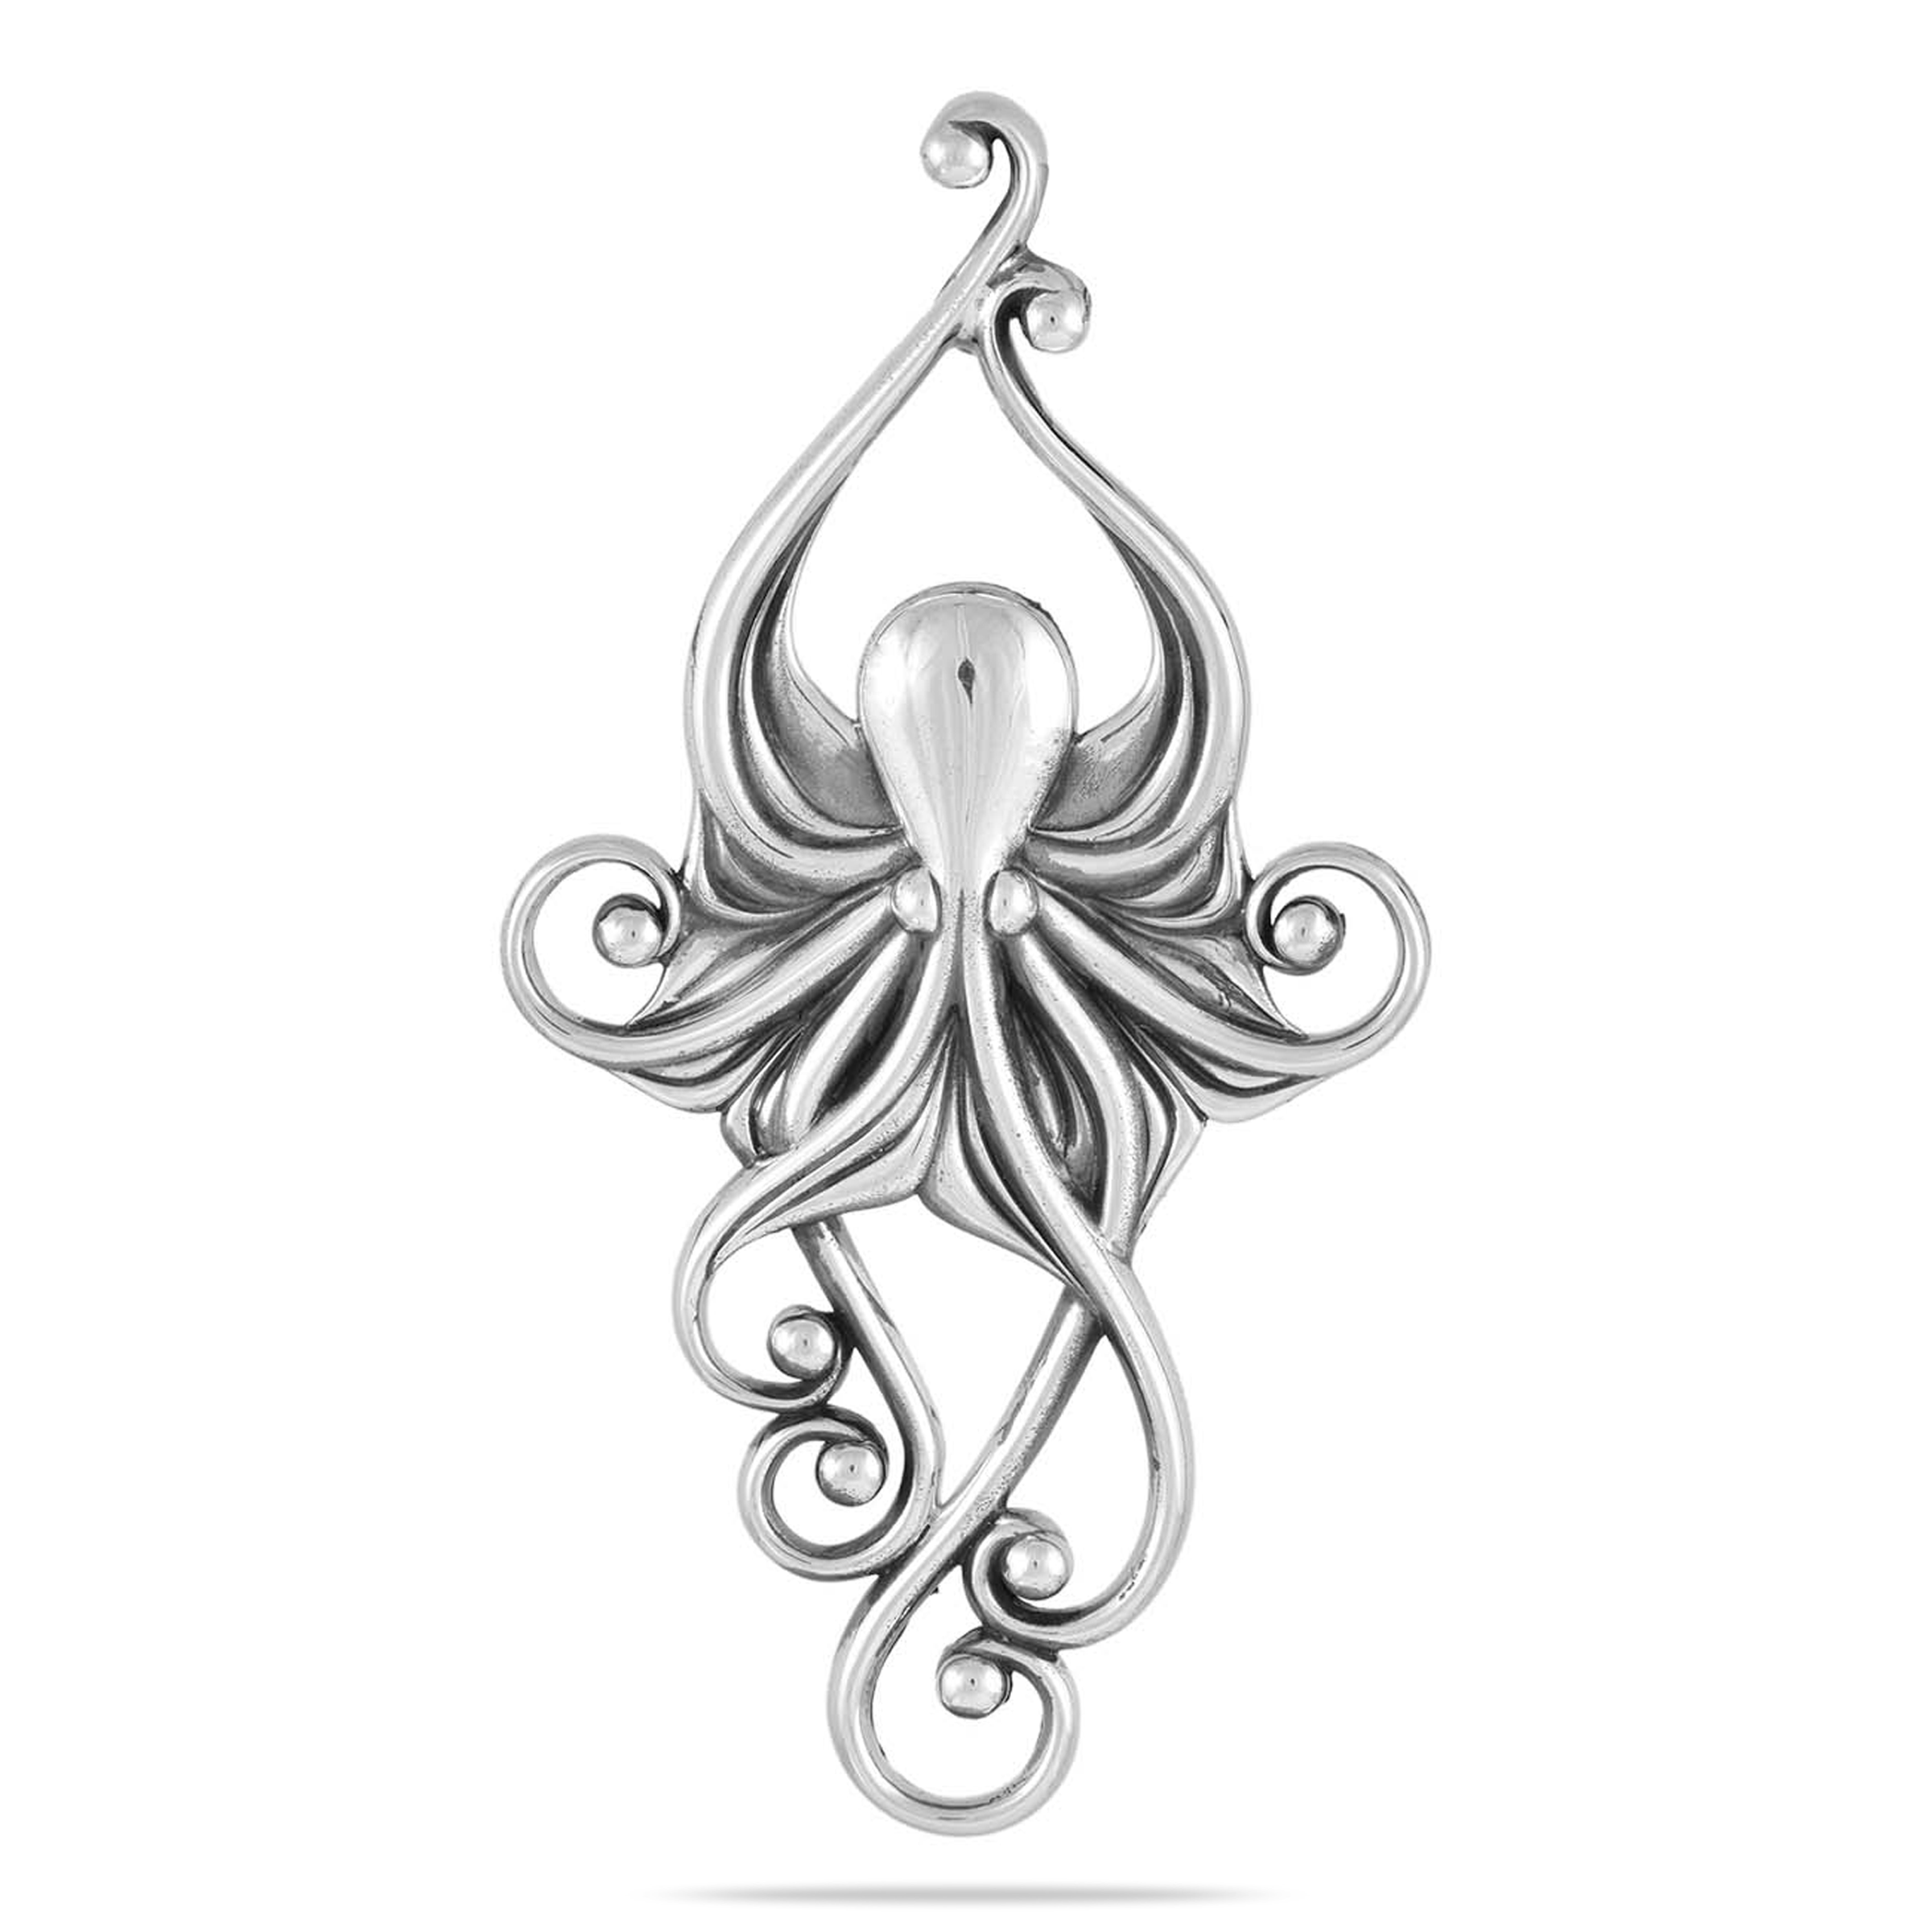 Living Heirloom Octopus Pendant in Sterling Silver - 63mm